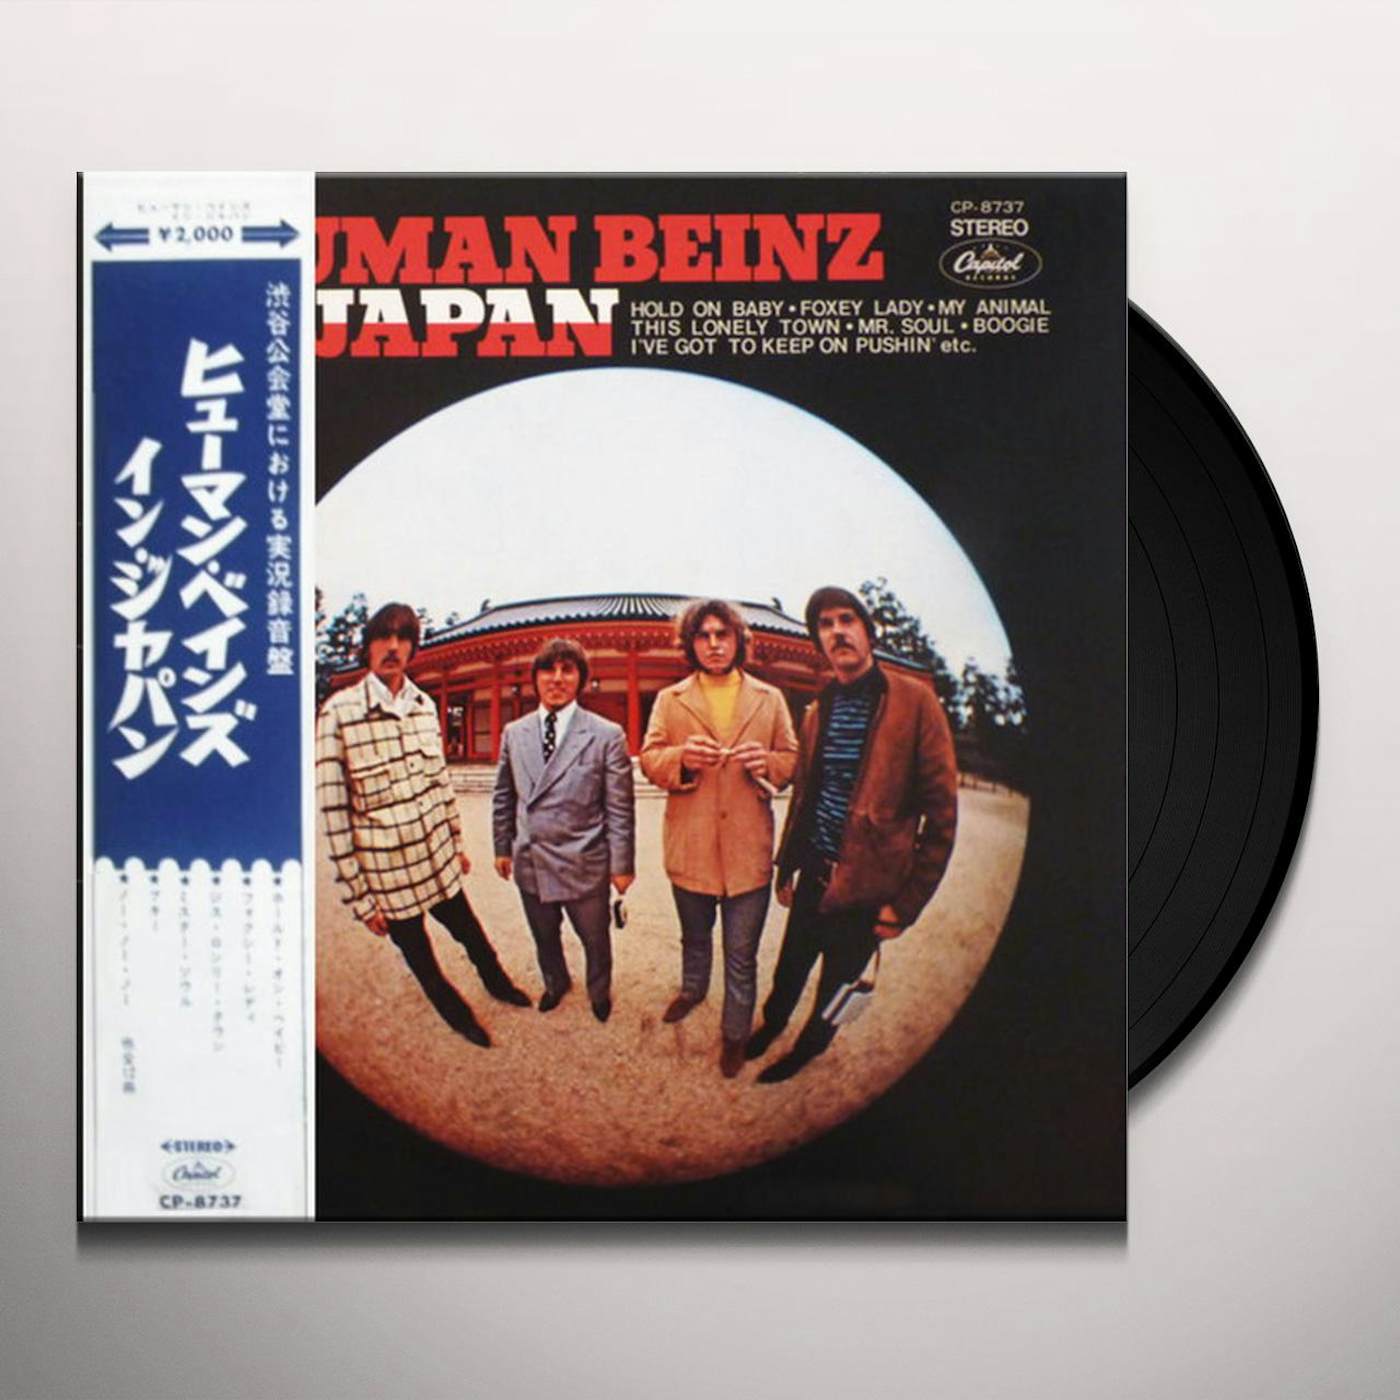 The Human Beinz IN JAPAN Vinyl Record